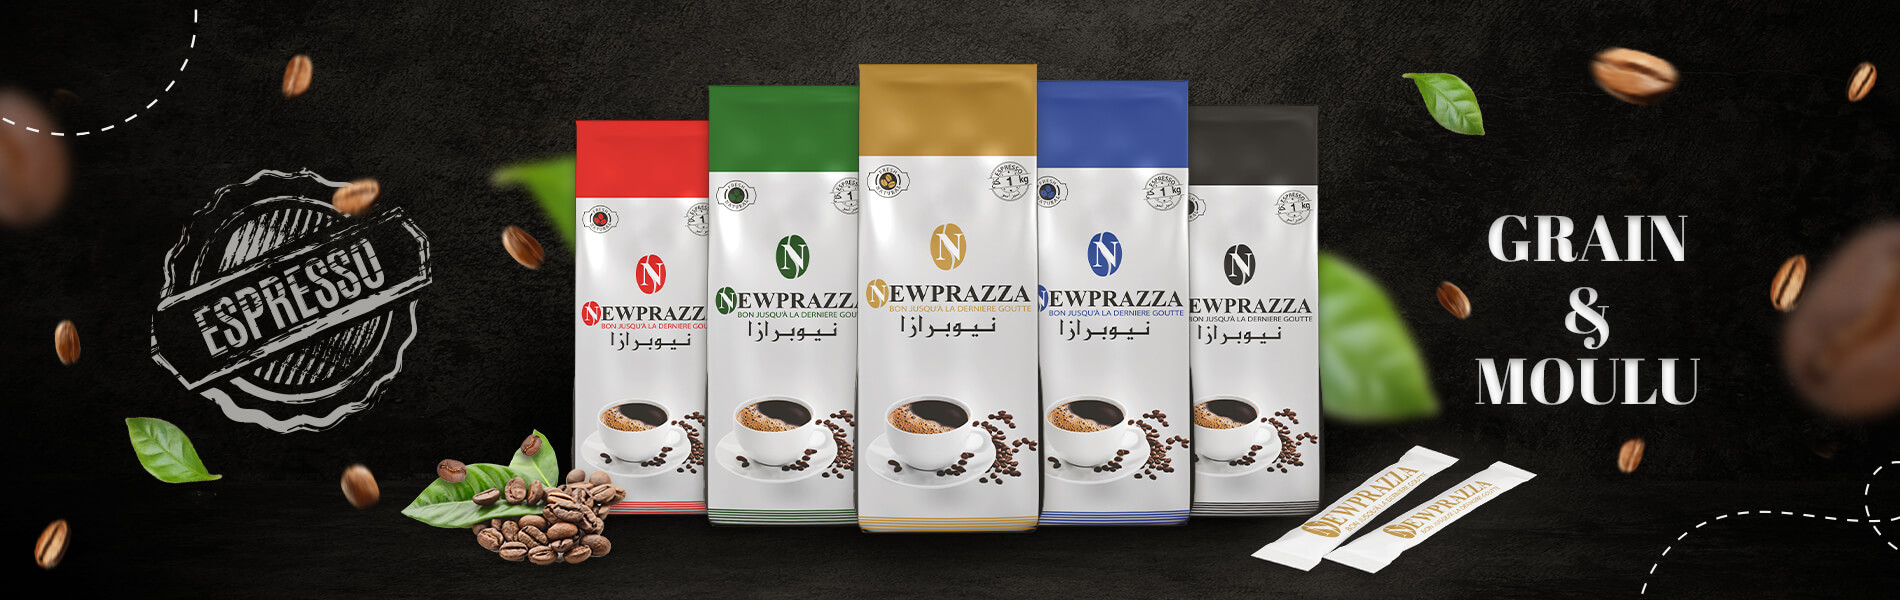 Bannière Newprazza espresso 1kg